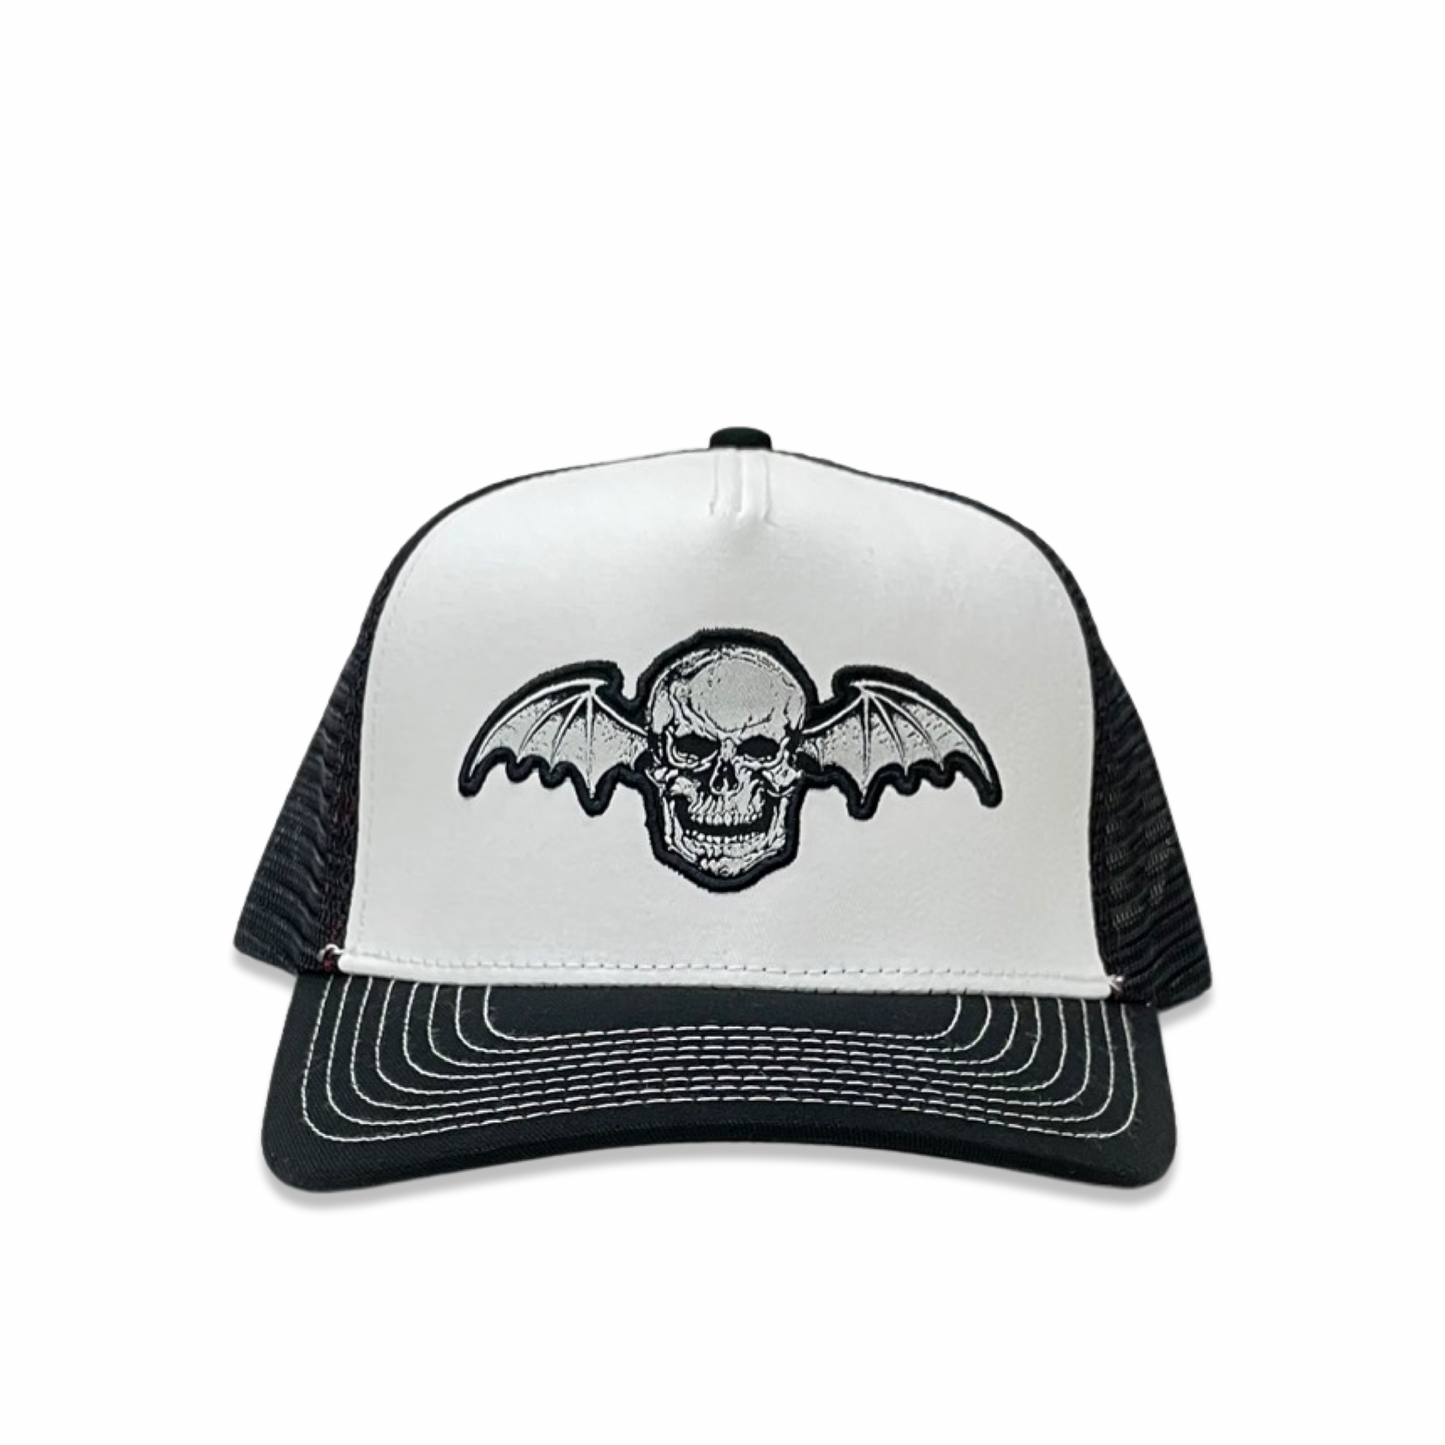 Off White Deathbat - Snapback Hat